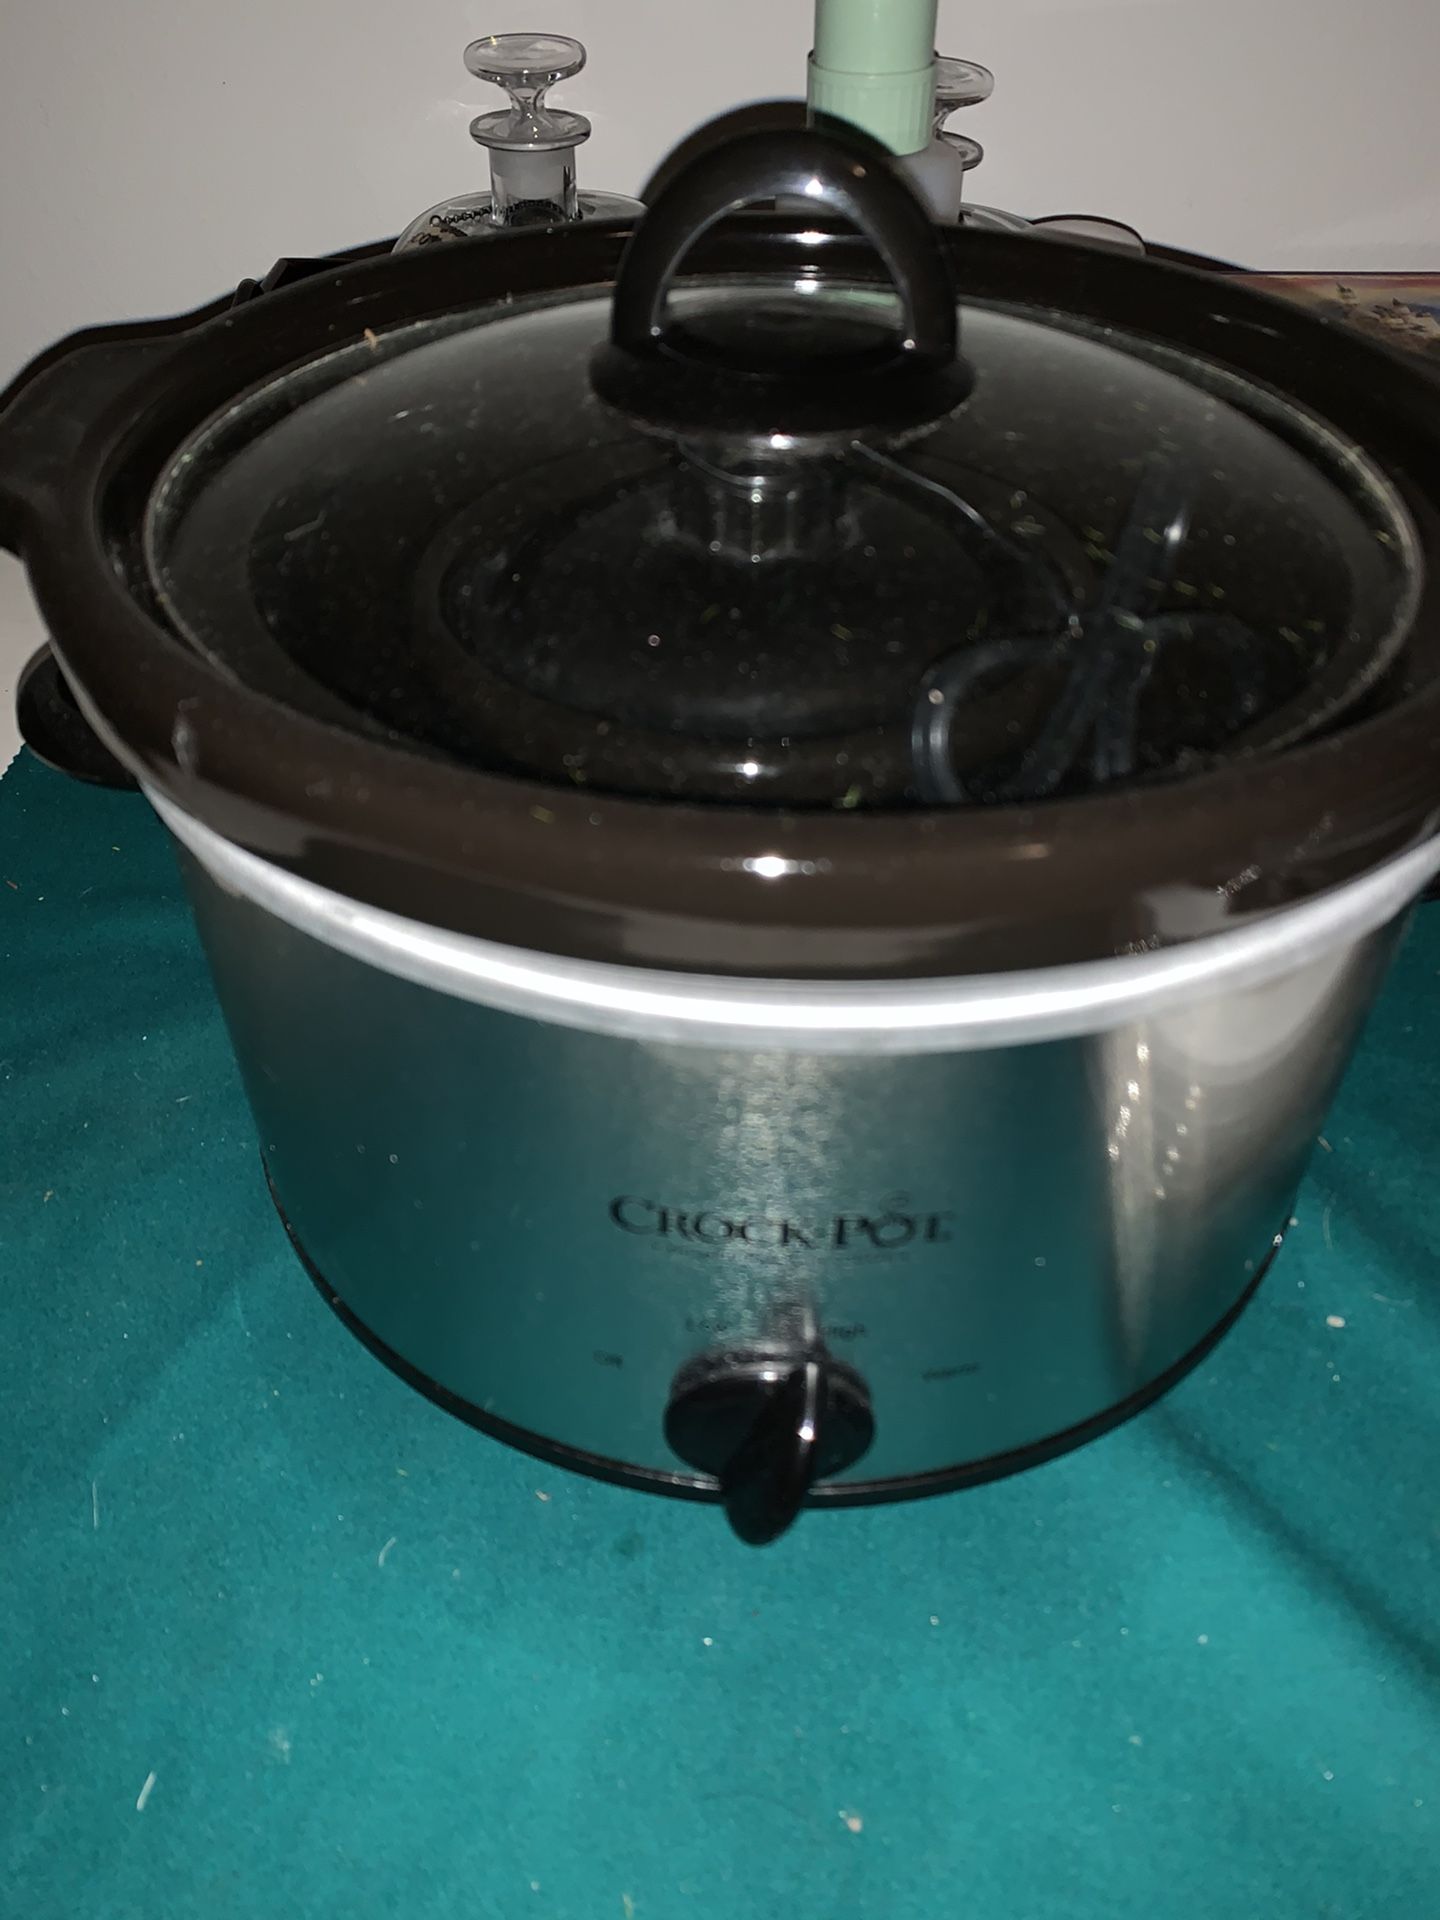 NEW Crock Pot 5 qt slow cooker with FREE Little Dipper Warmer